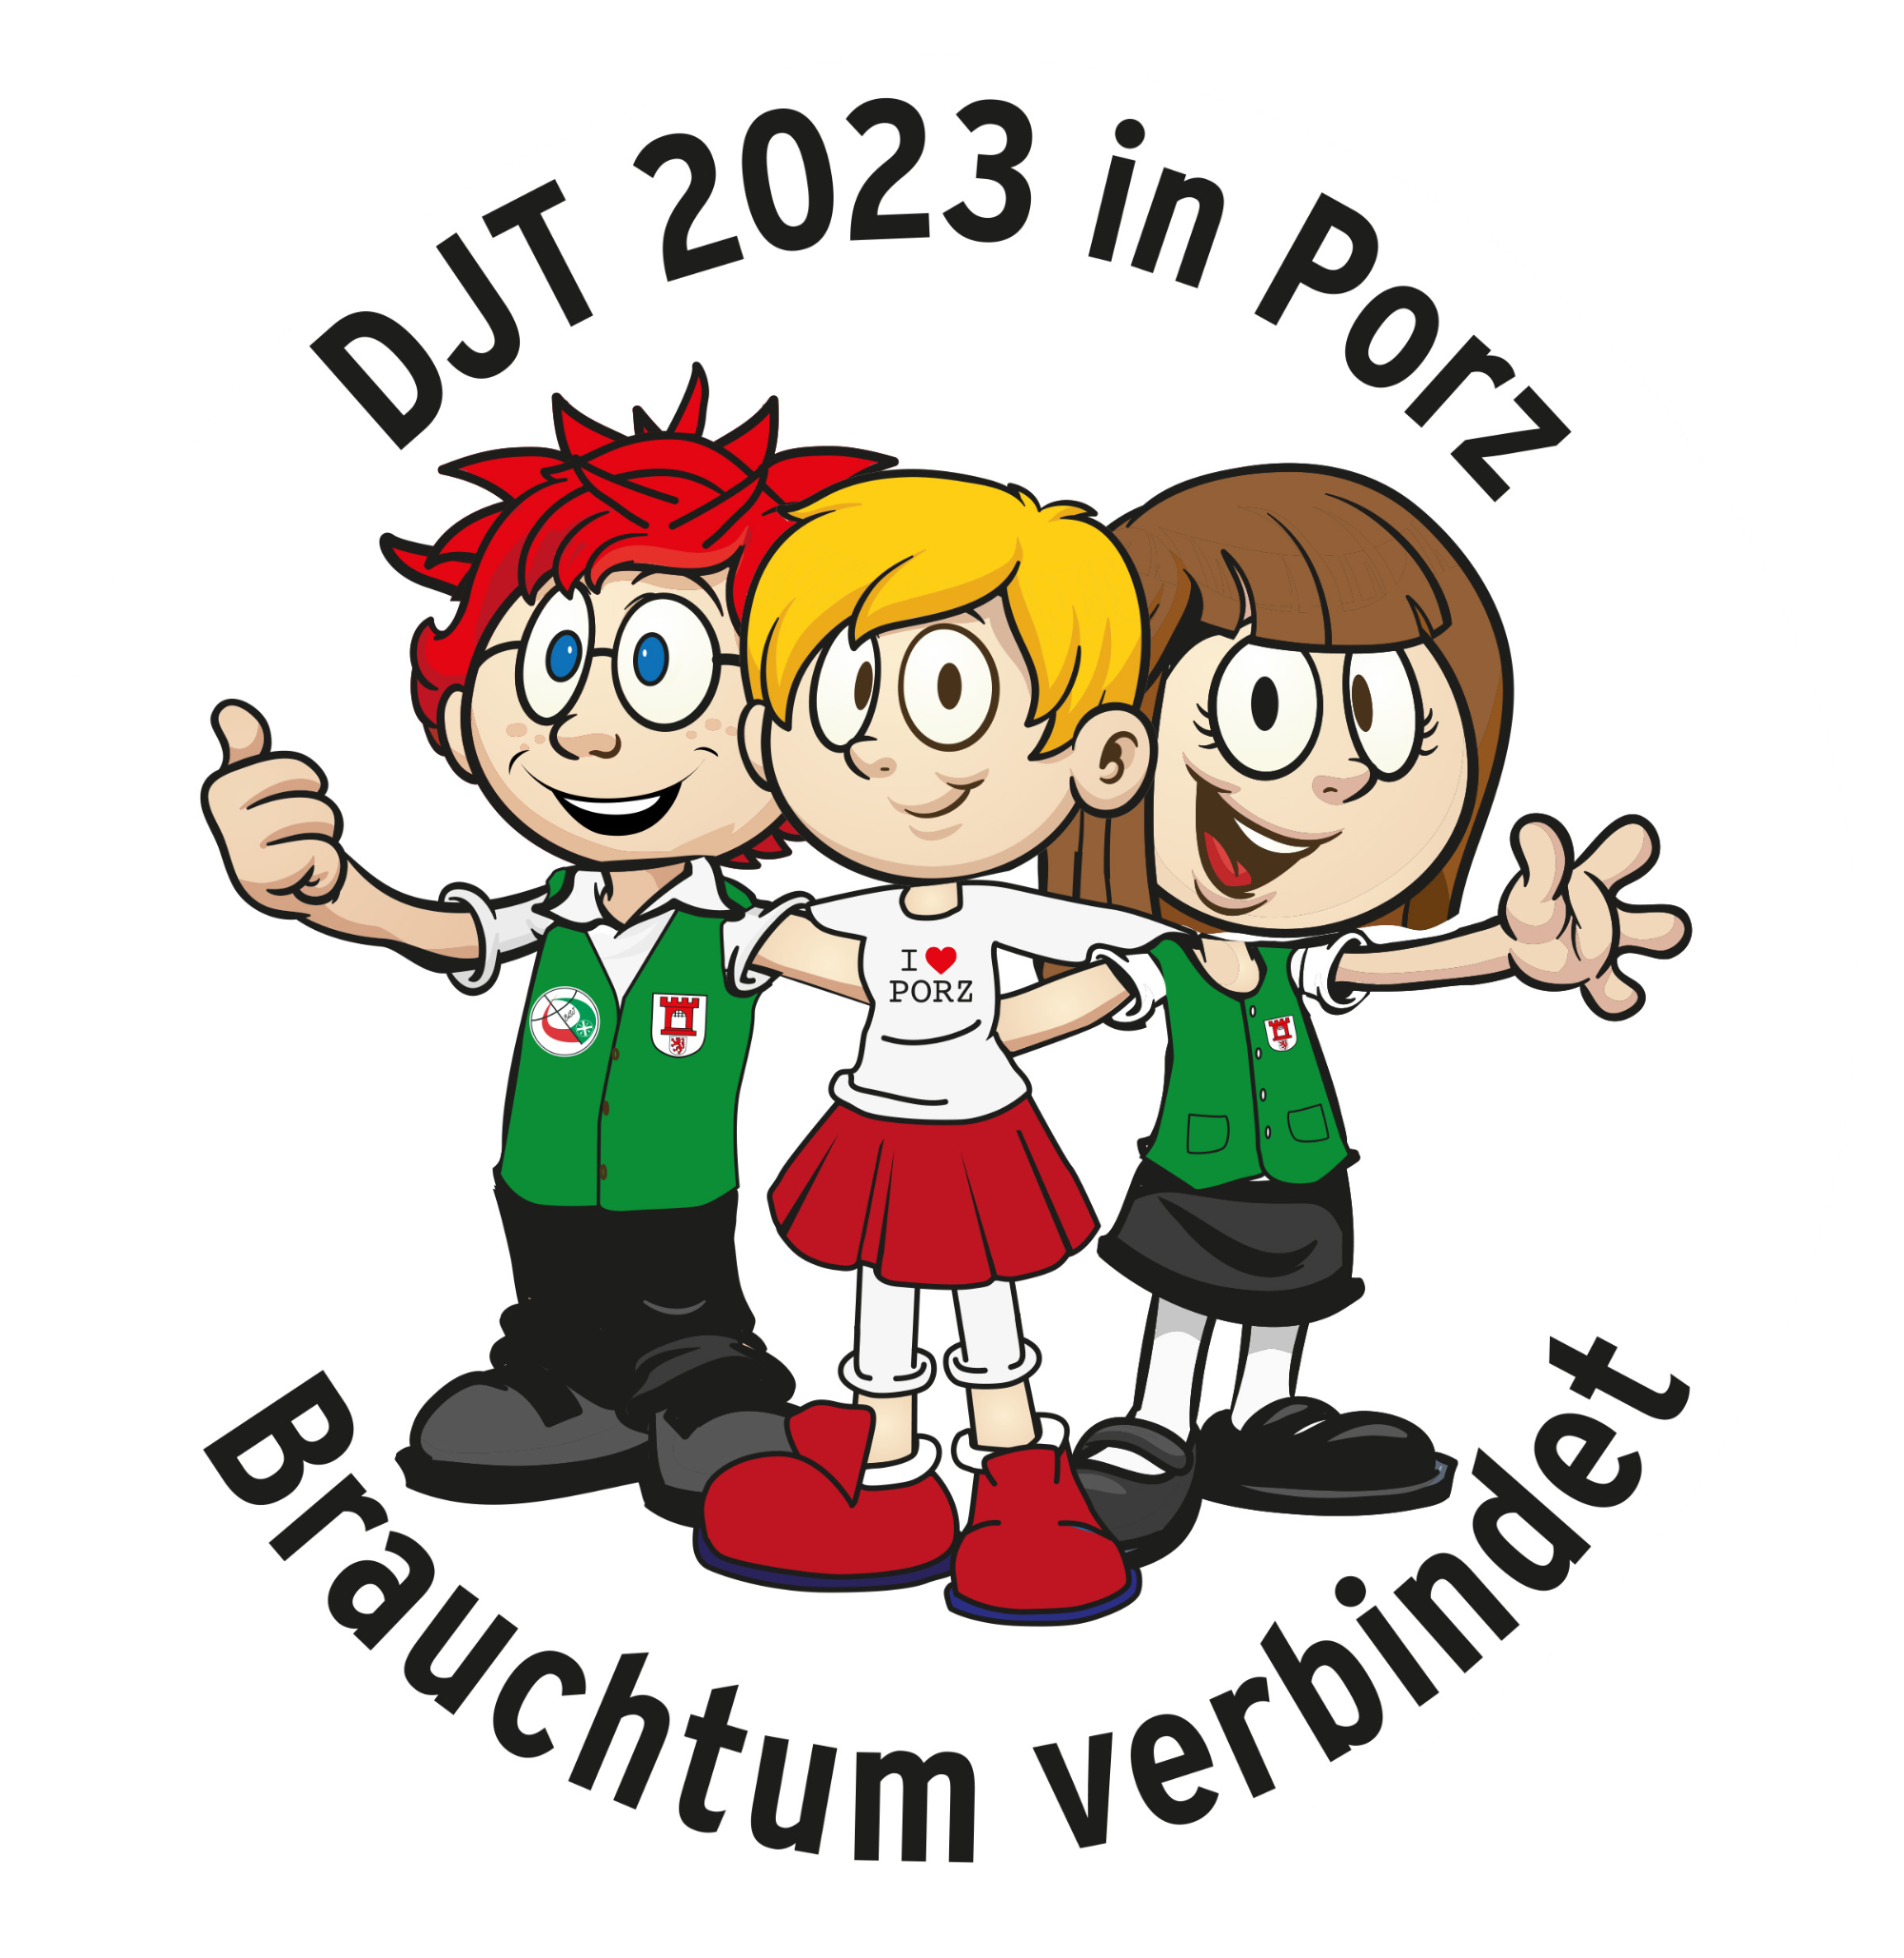 DJT Logo 2023